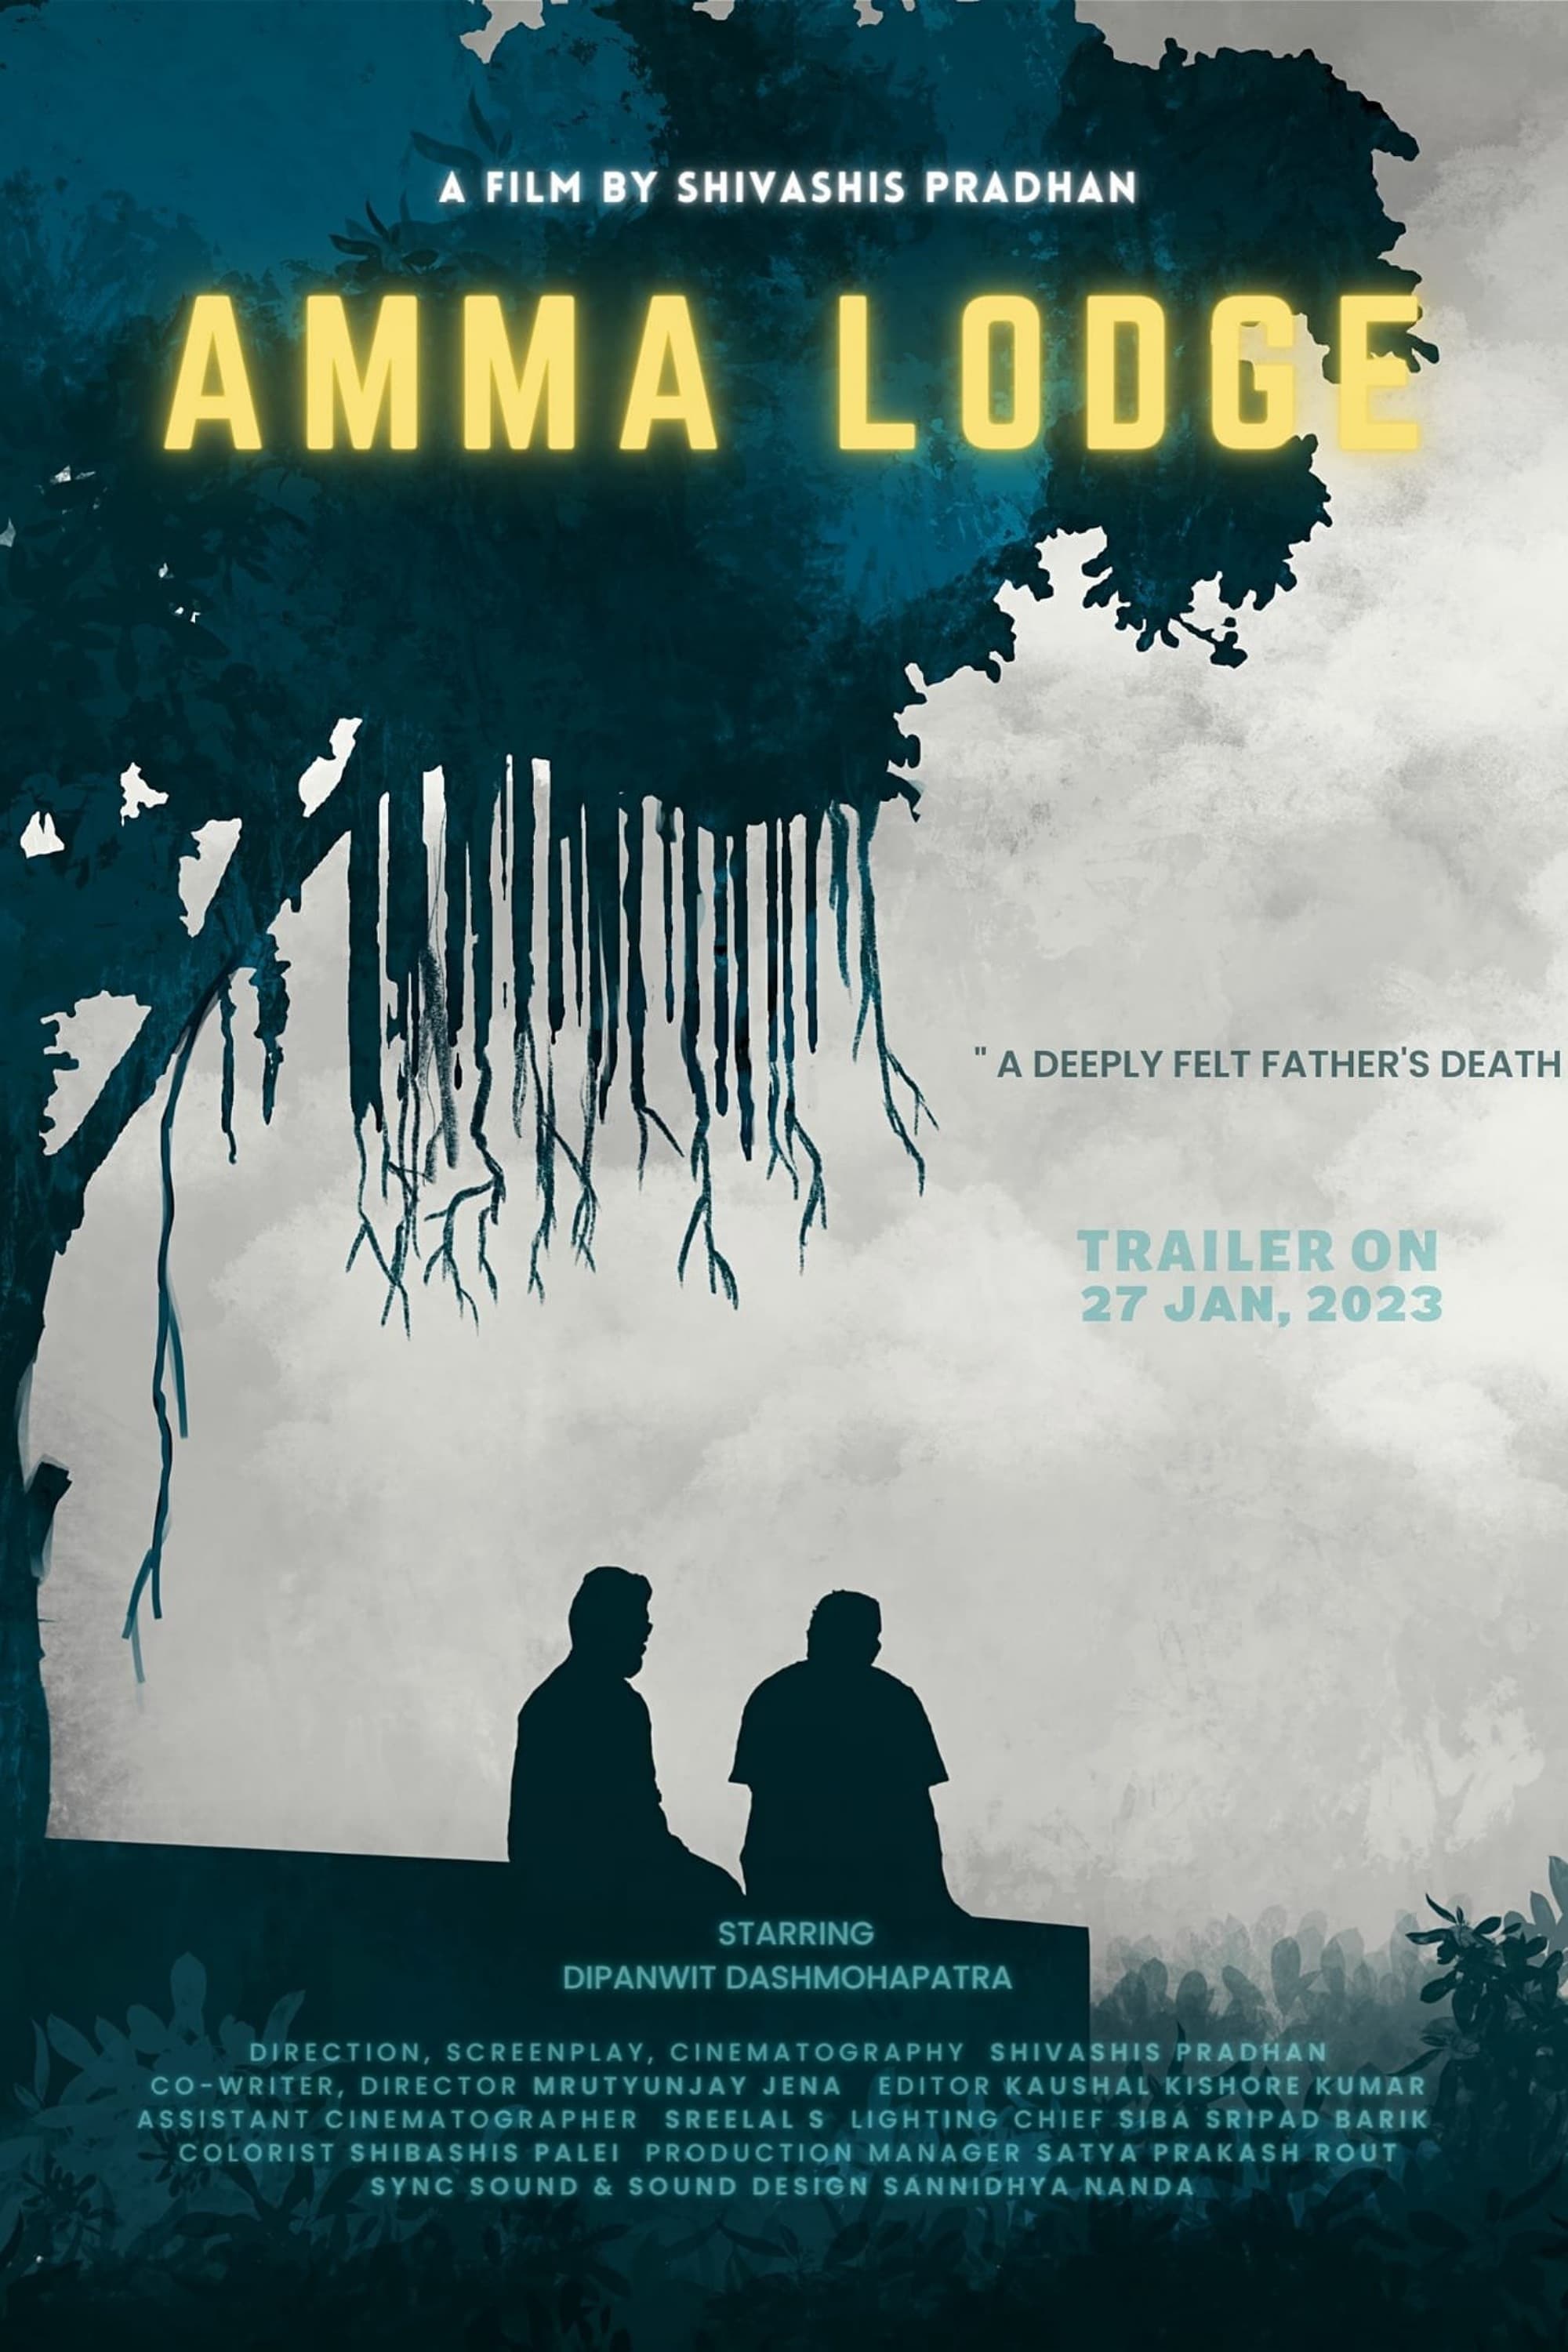 Amma Lodge